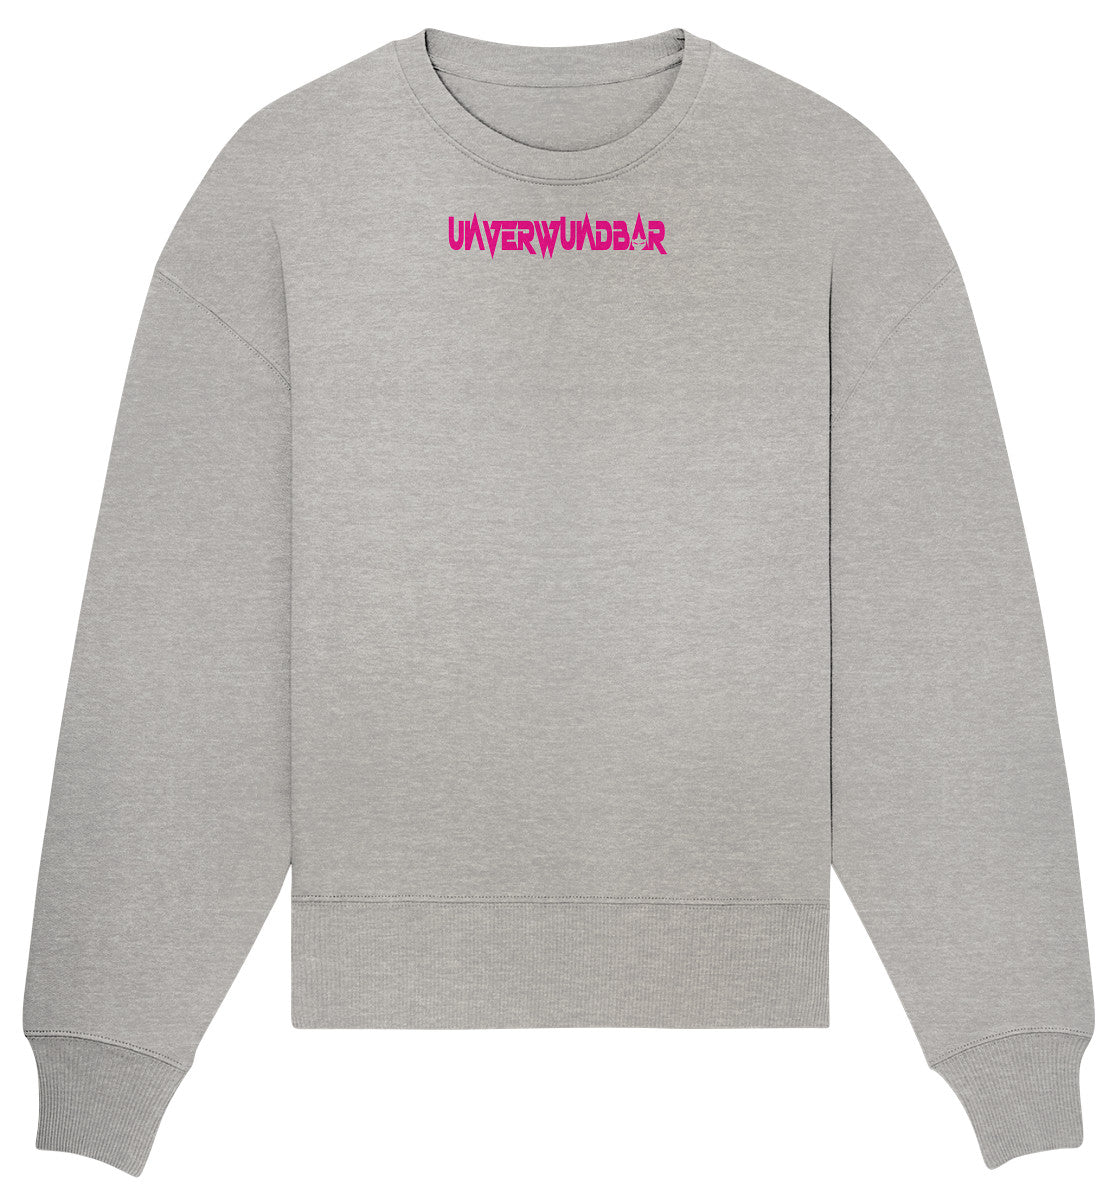 UNVERWUNDBAR - Organic Oversize Sweatshirt